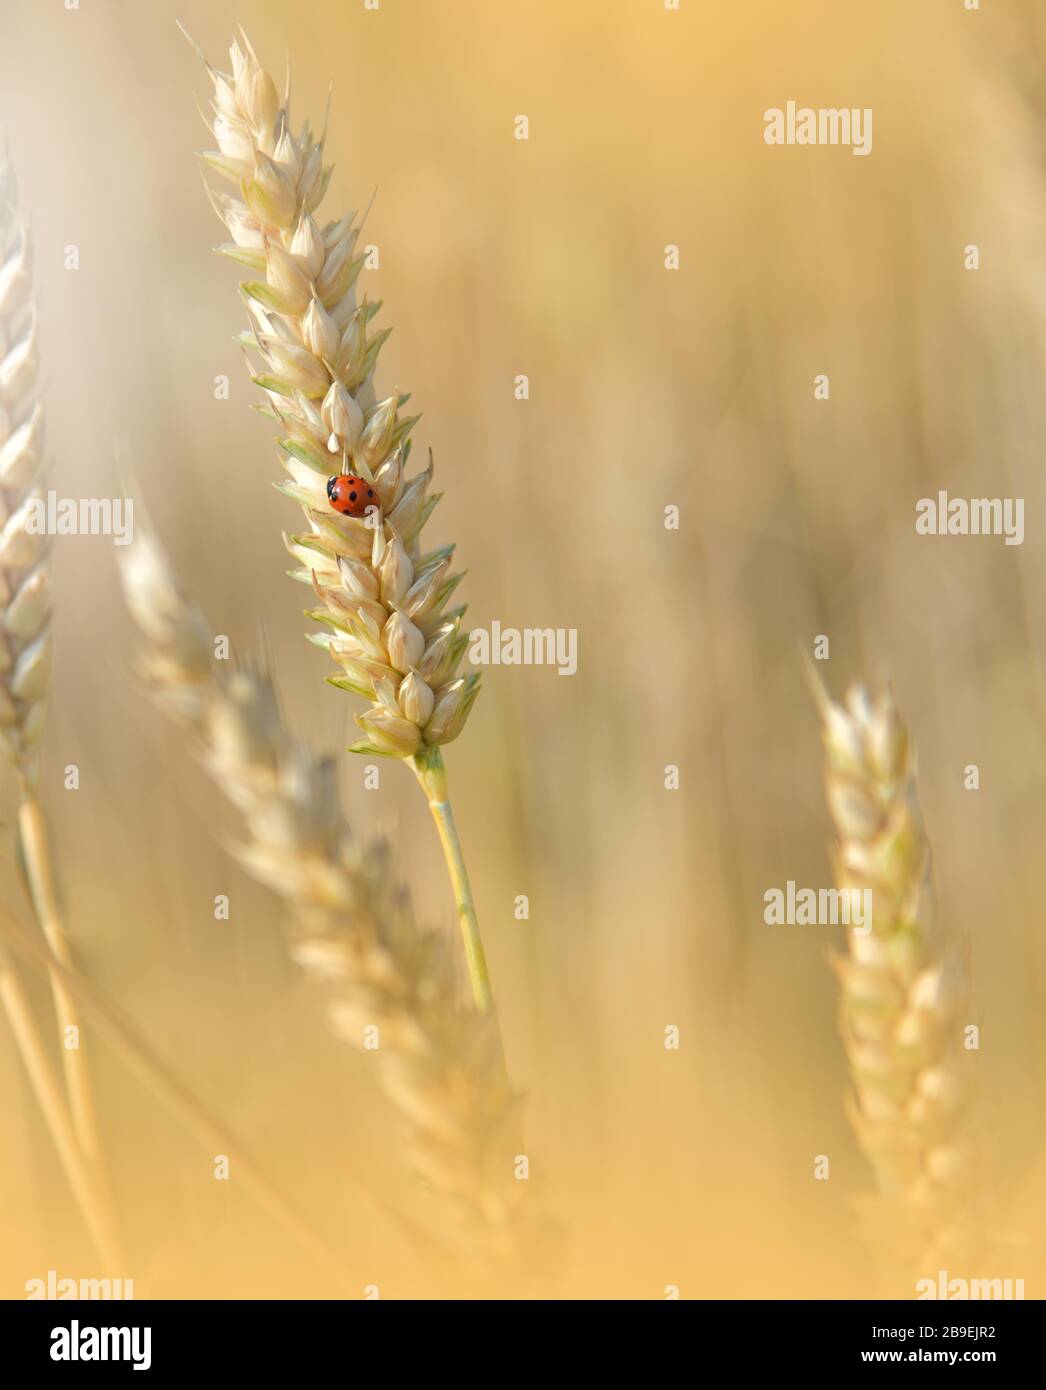 Beautiful Nature   of Golden Wheat Close .Sunset   Scenery under Shining  Artistic Wallpaper  Stock Photo - Alamy